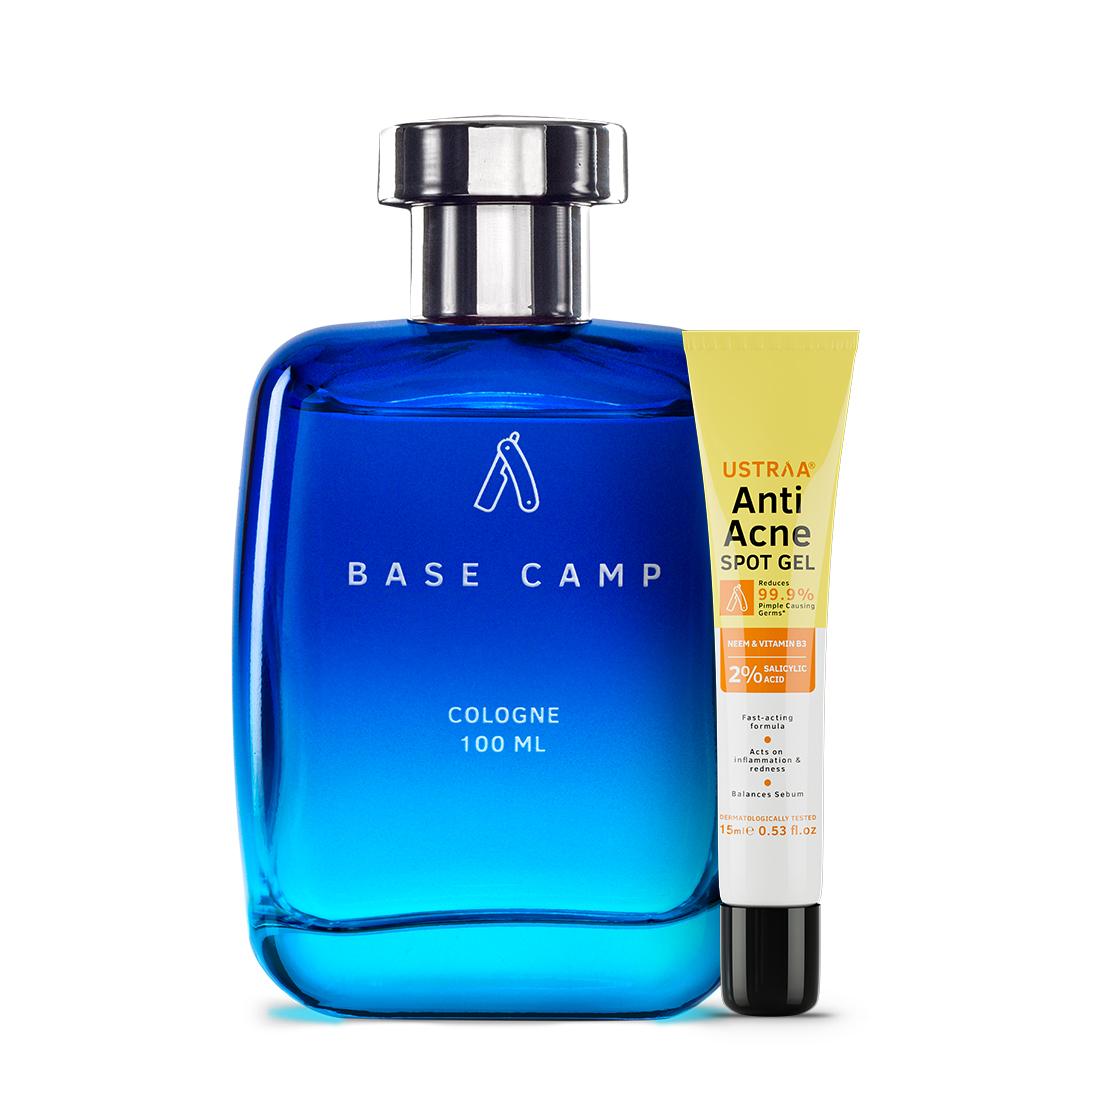 Anti Acne Spot Gel & Base Camp Cologne - 100 ml - Perfume for Men